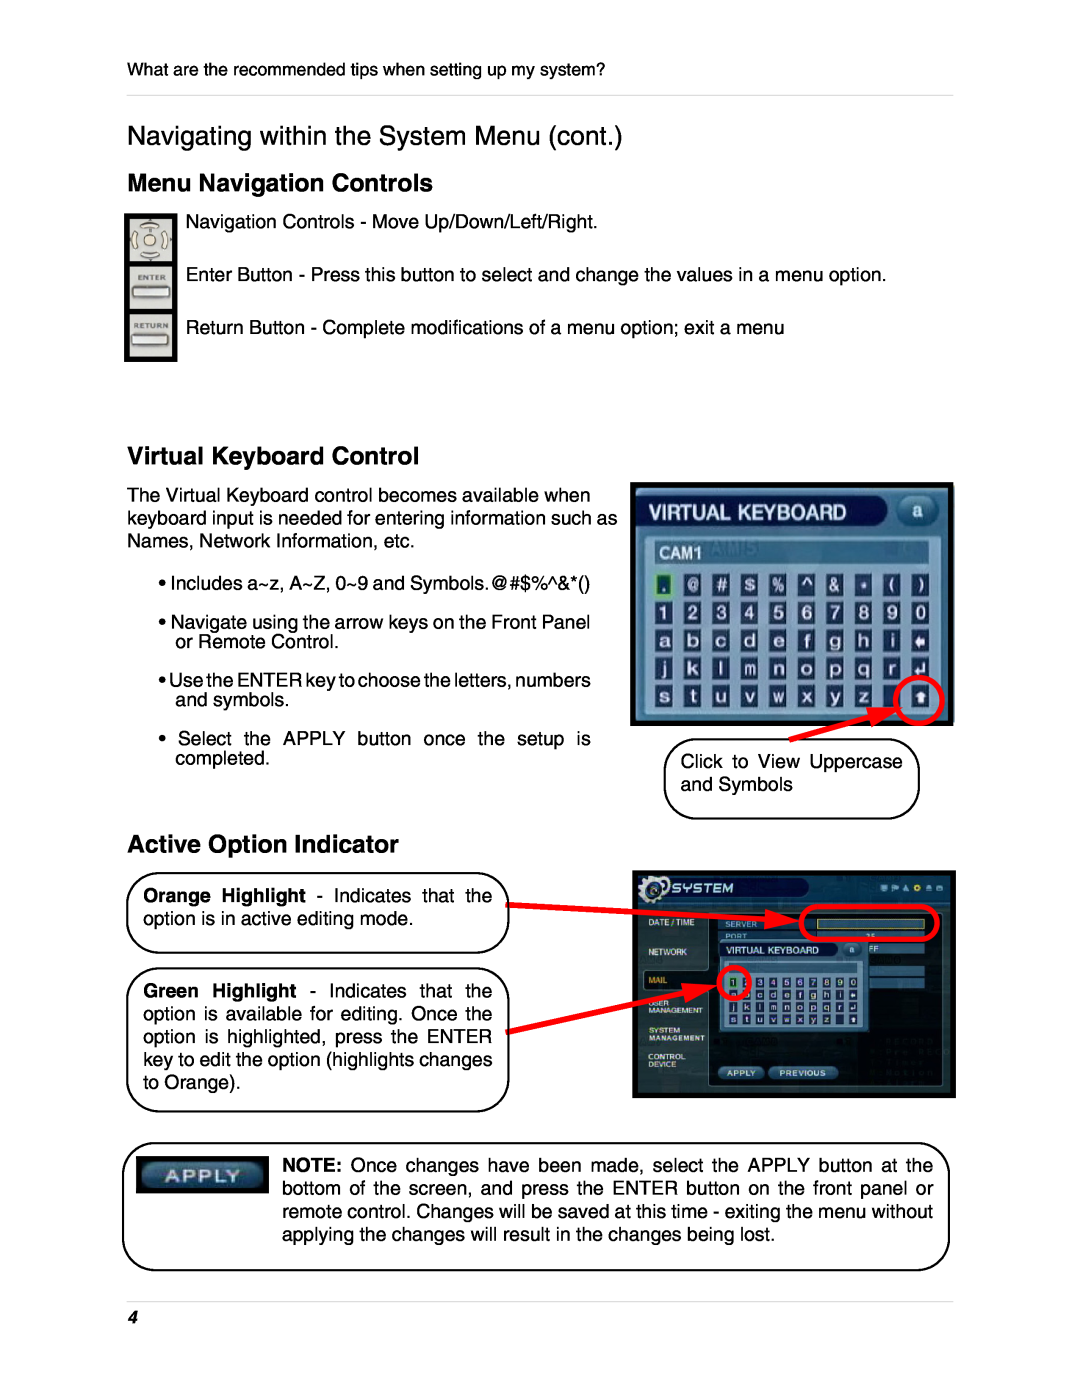 LOREX Technology SG 19LD804-161 Navigating within the System Menu cont, Menu Navigation Controls, Virtual Keyboard Control 